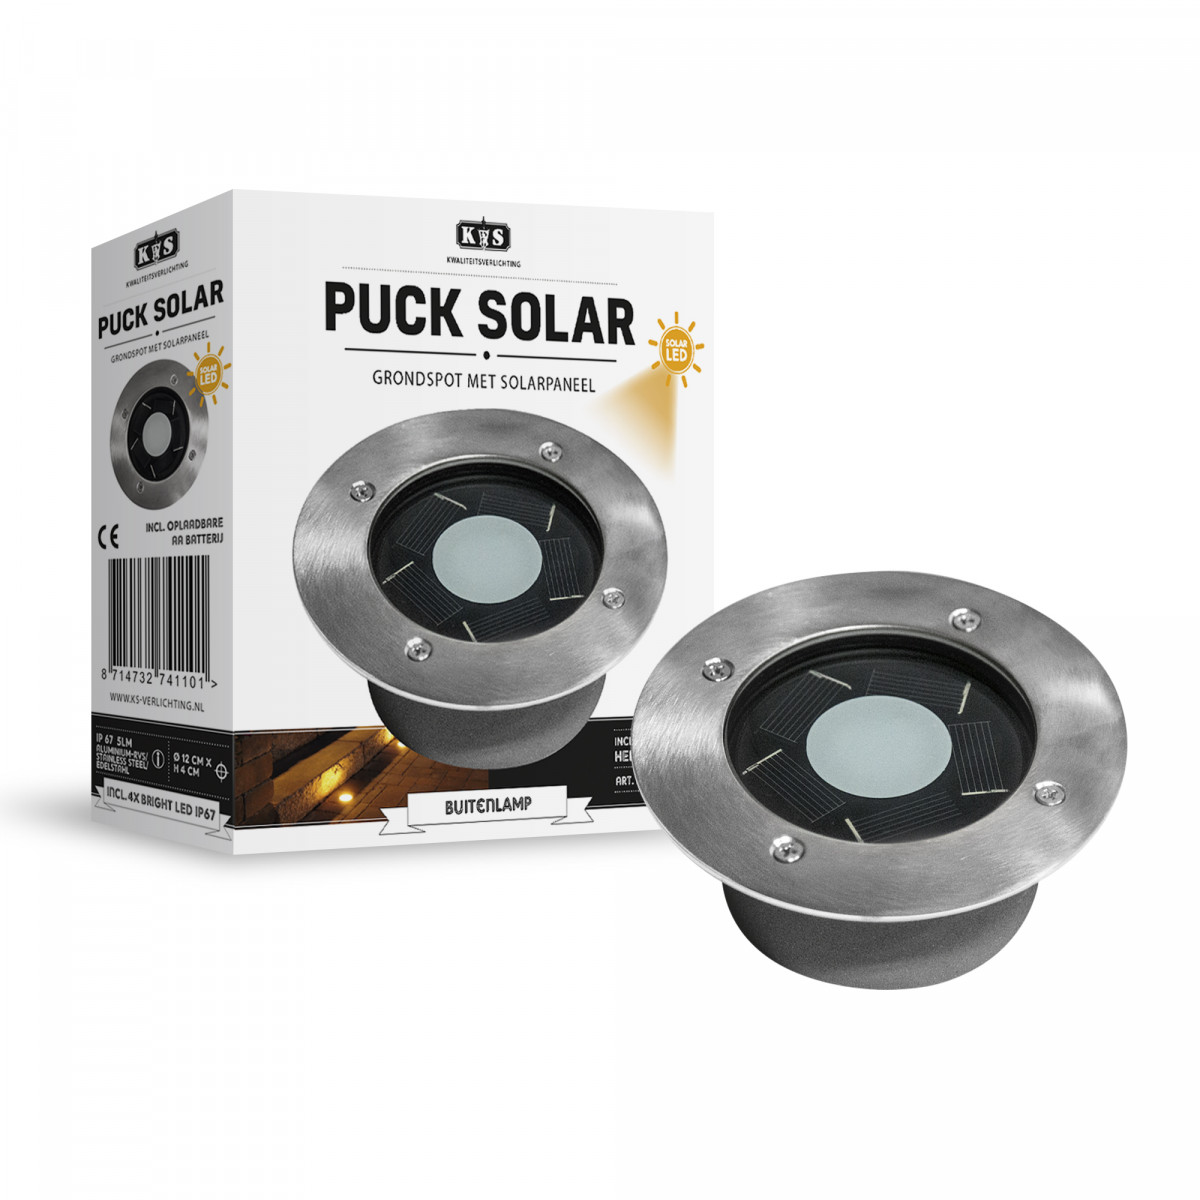 Puck solar